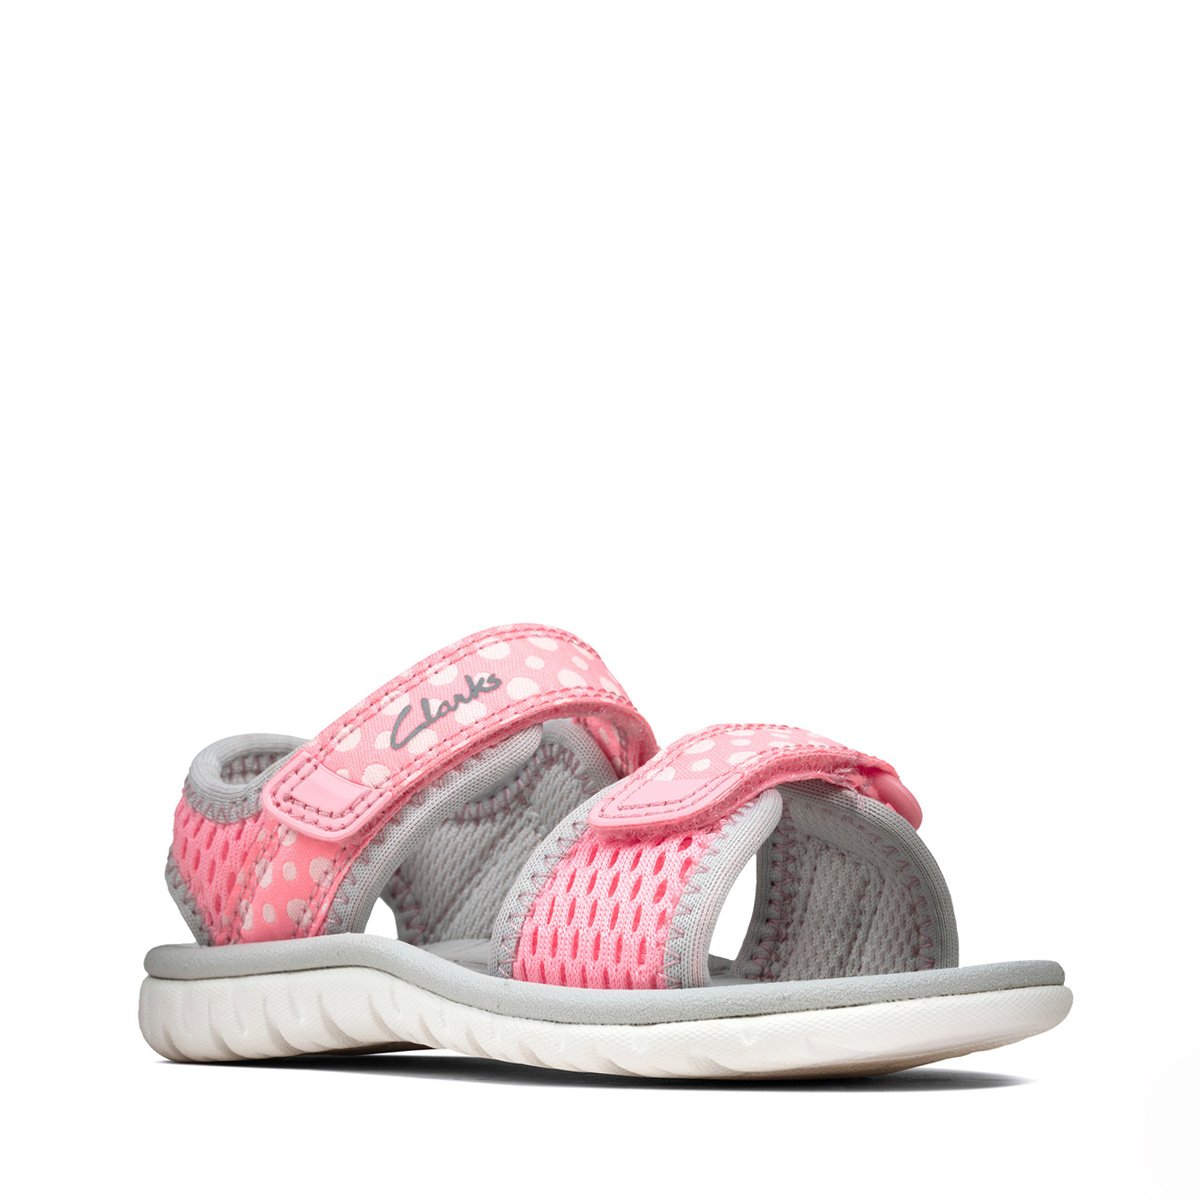 clarks sandals pink